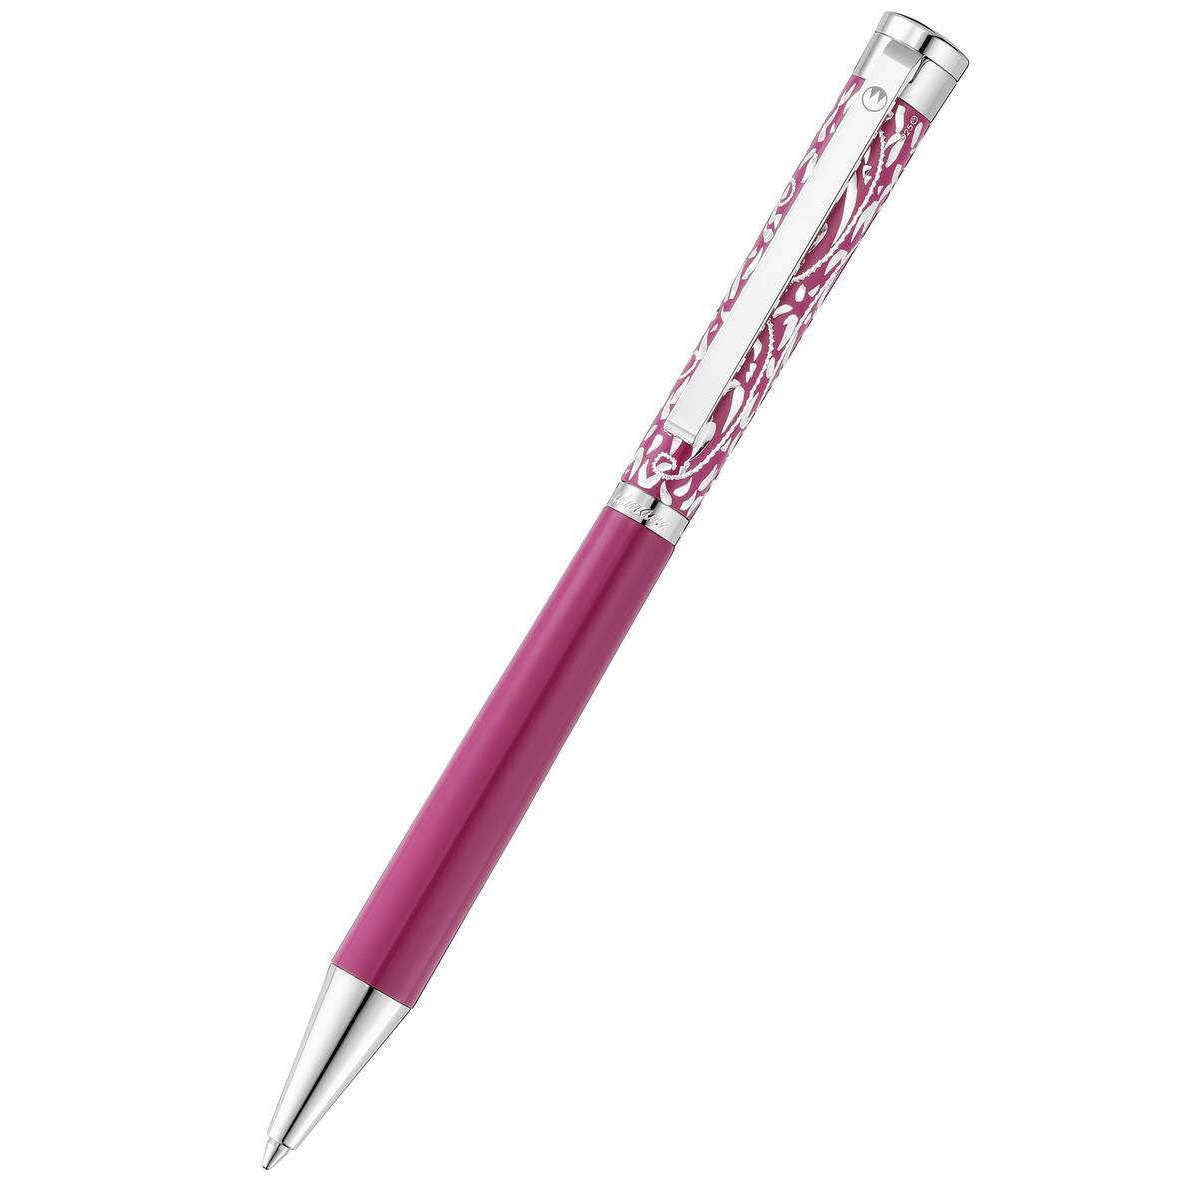 Waldmann Pens Xetra Vienna Special Edition Ballpoint Pen - Pink/Silver